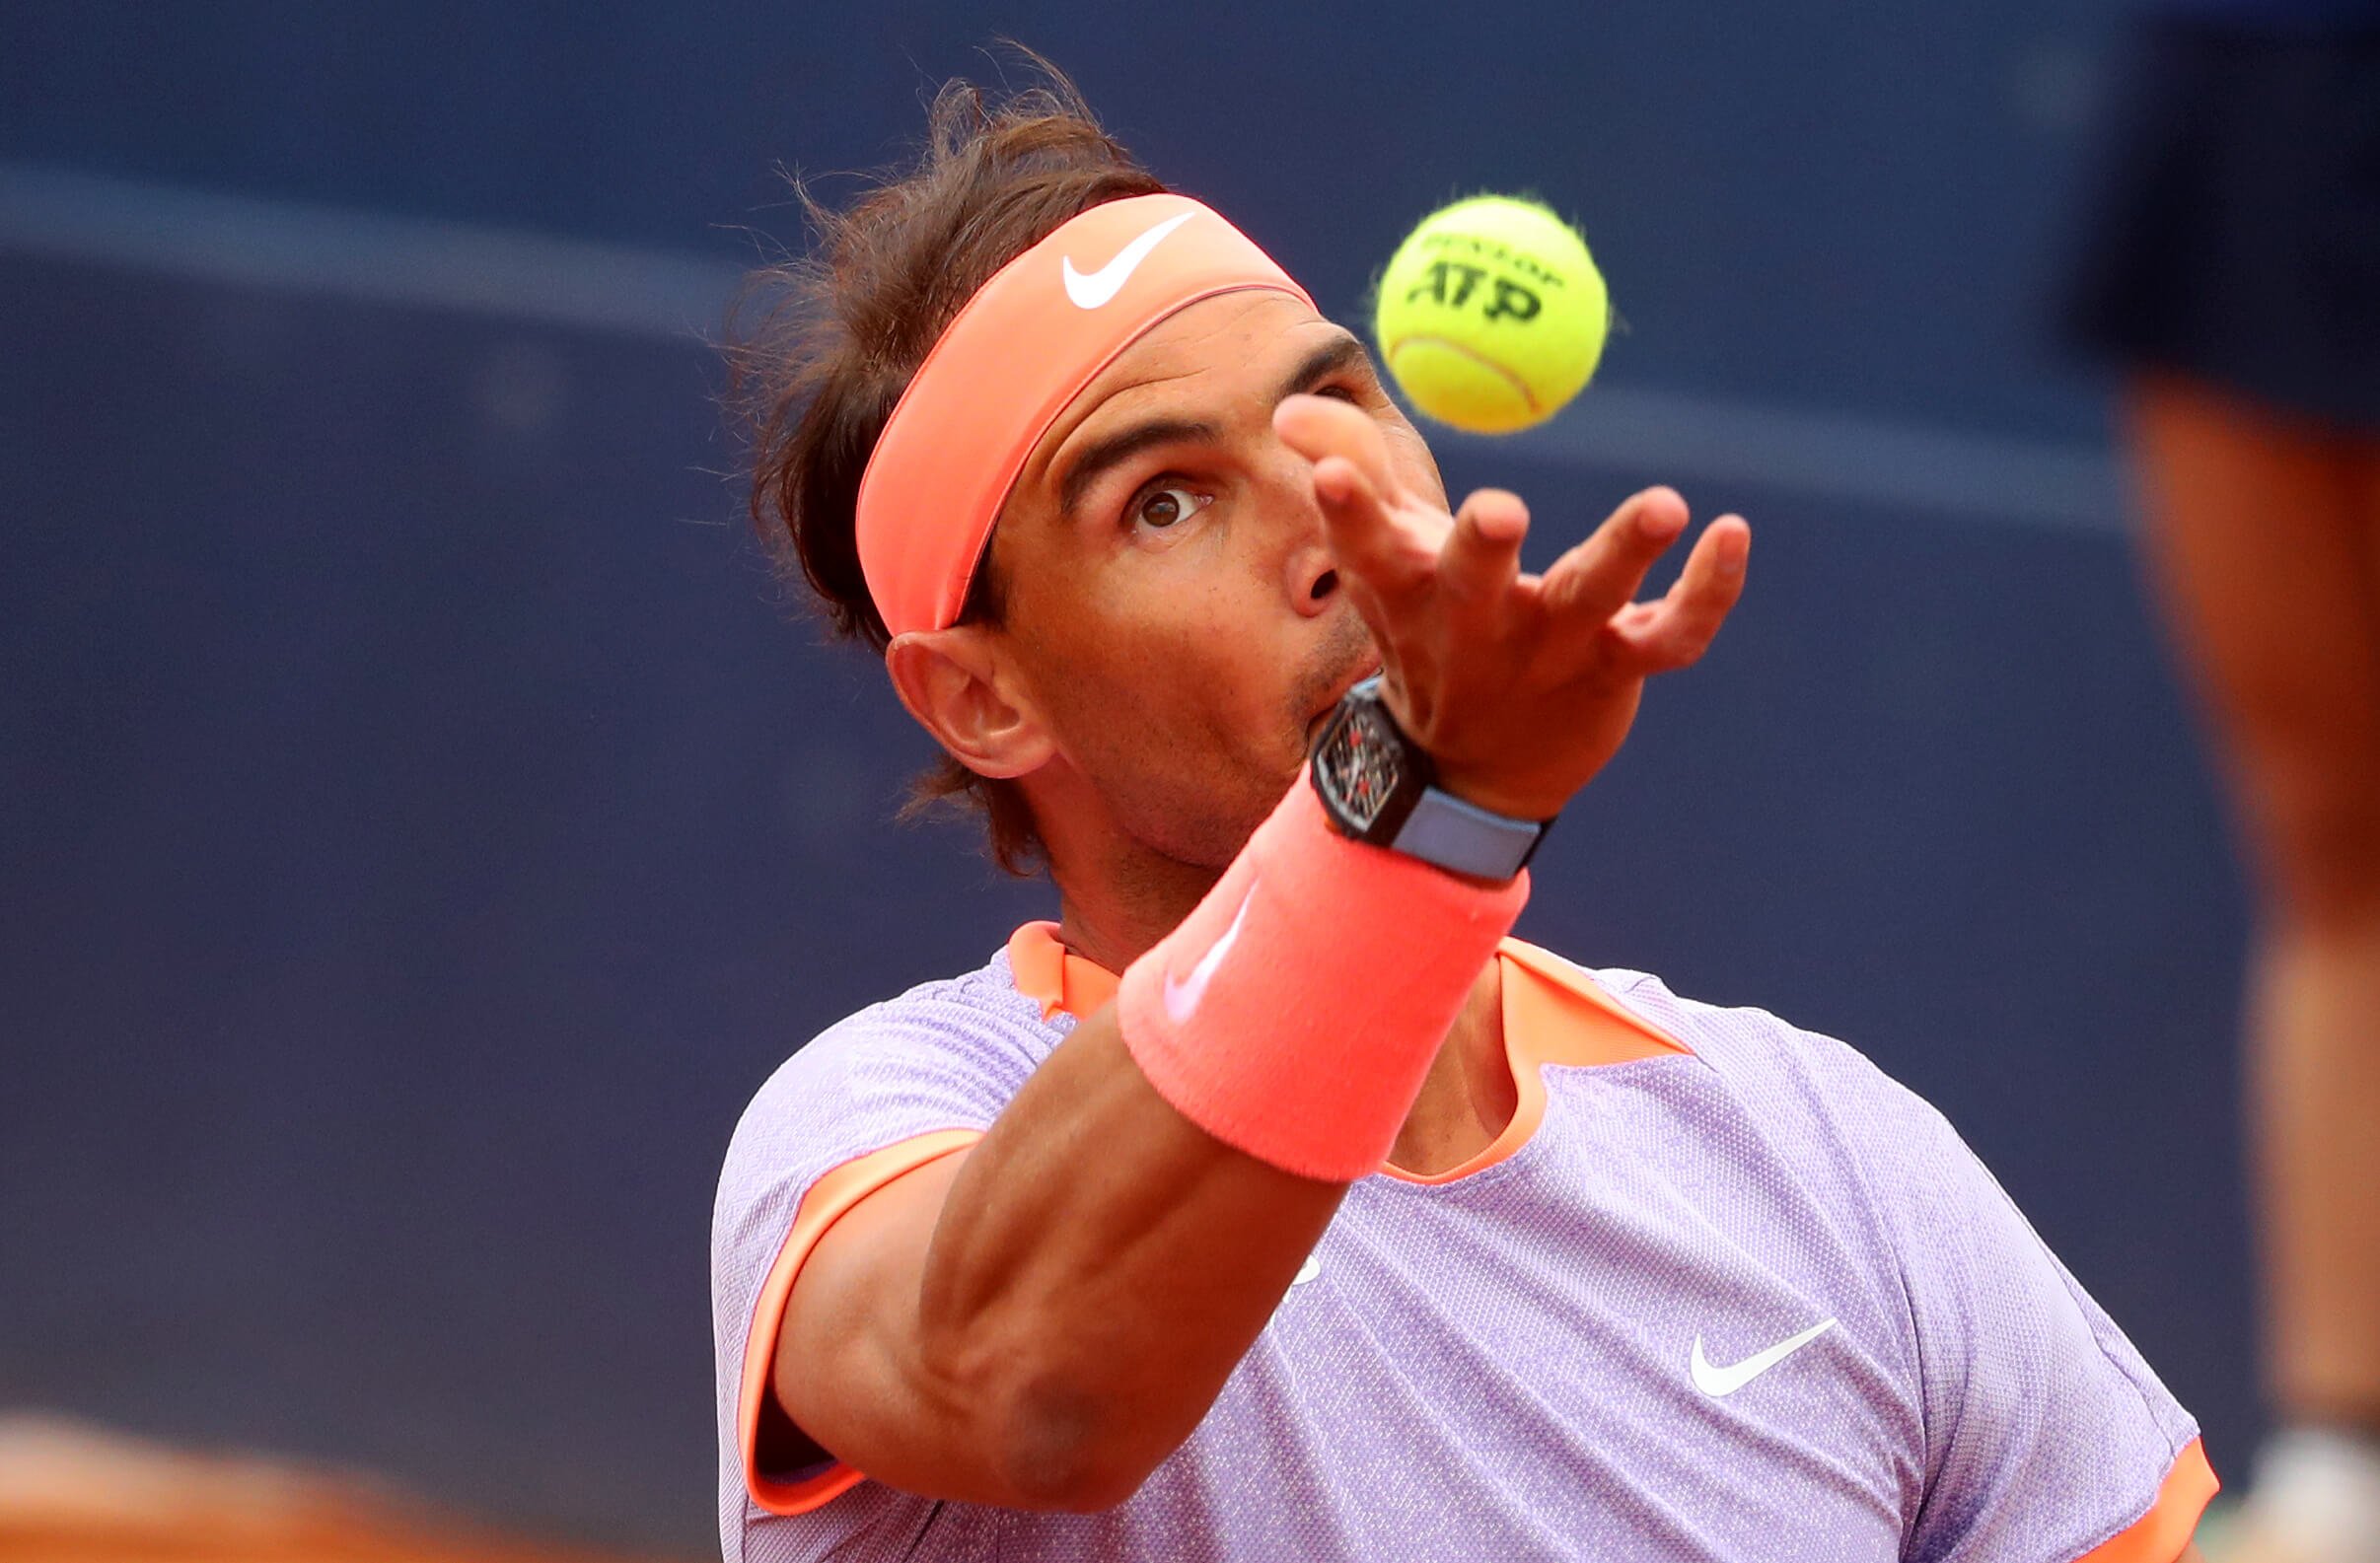 Is Rafa Nadal's Magic Clay Return Last Stand or New Dawn?